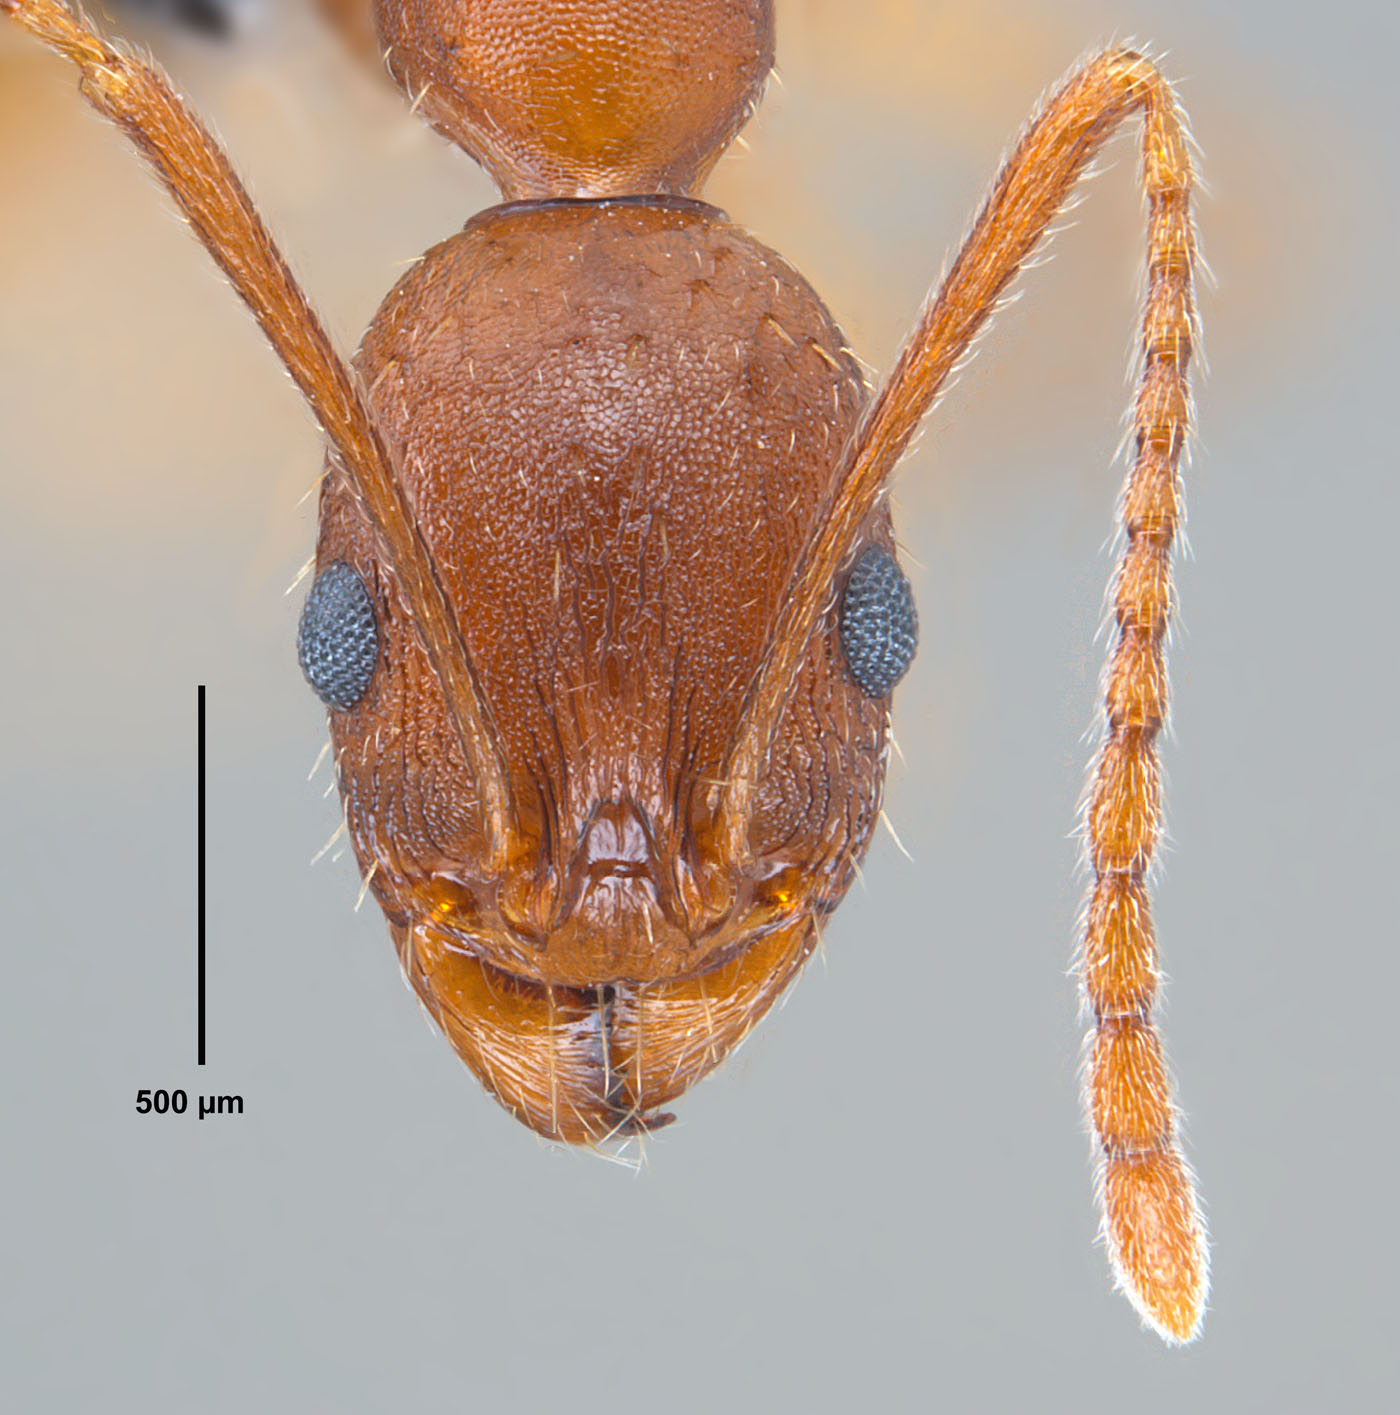 Aphaenogaster carolinensis full face view of worker.